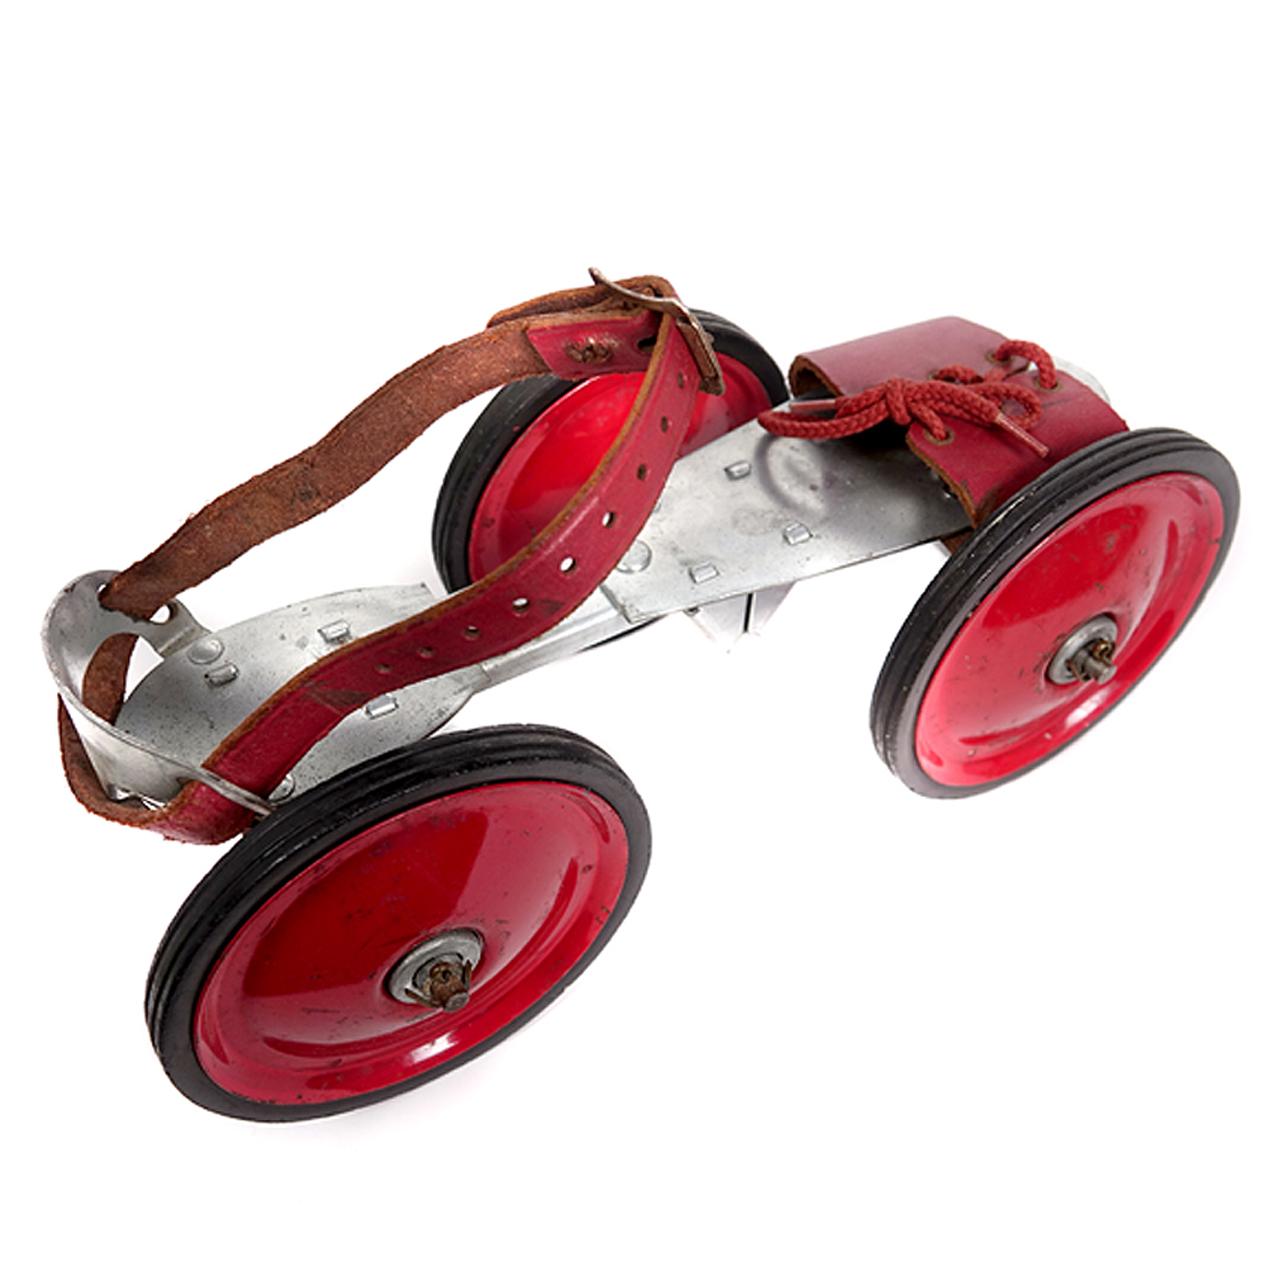 3 wheel roller skates for adults